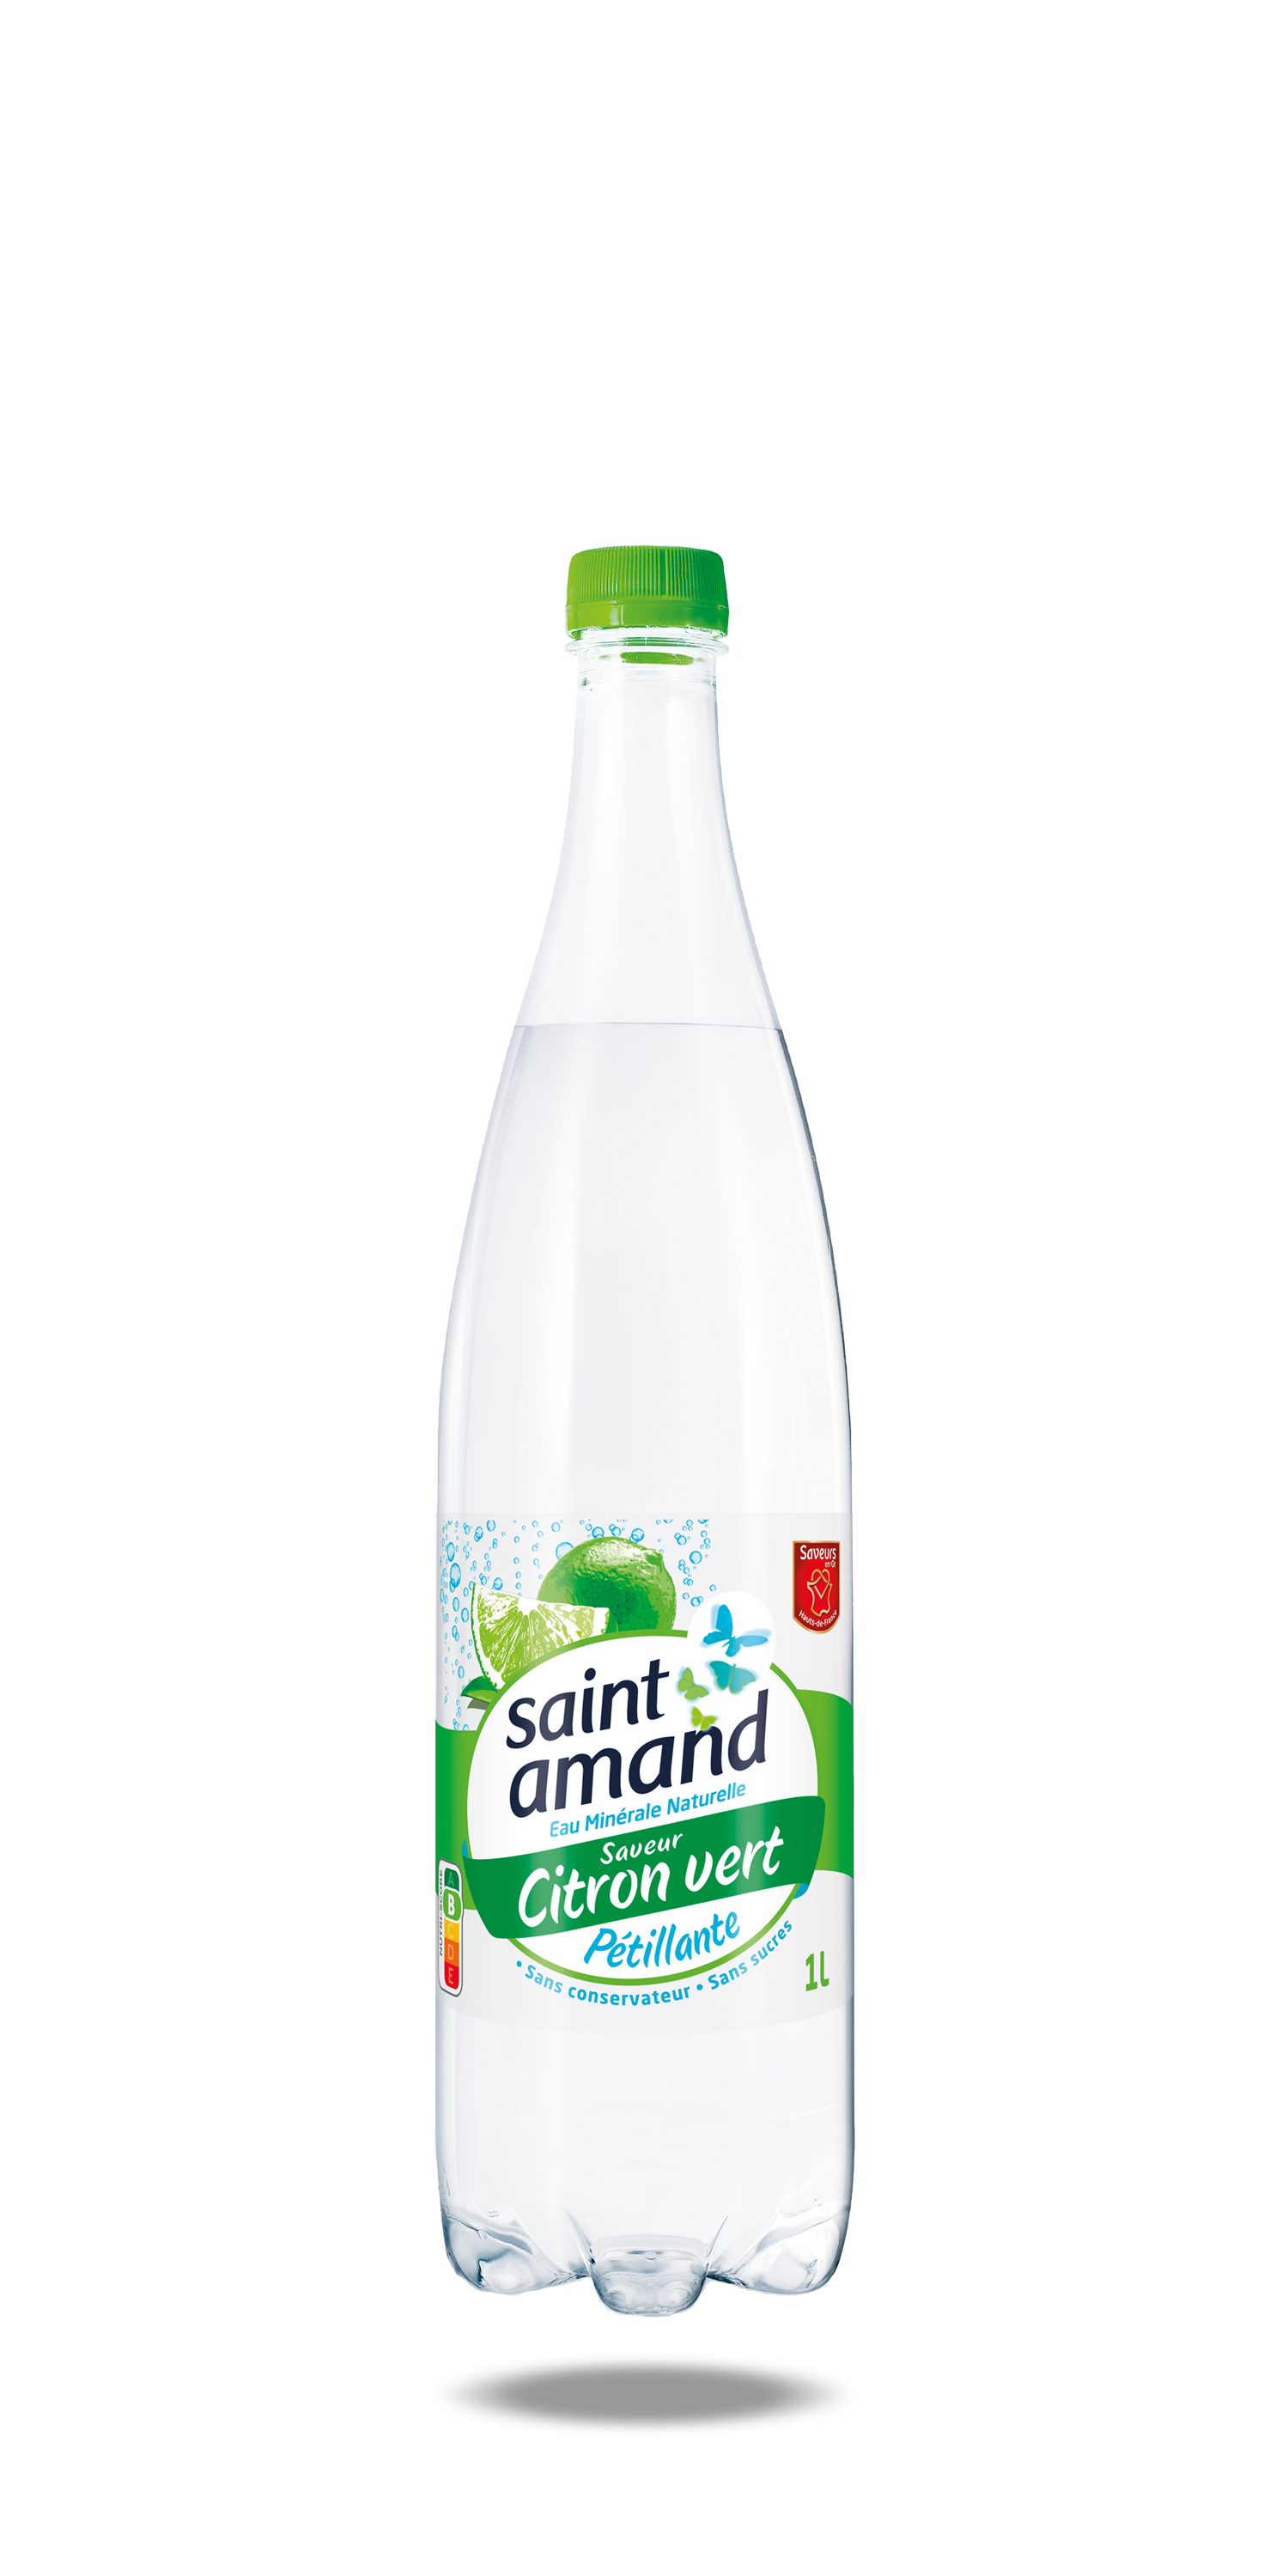 Saint Amand pétillante citron vert